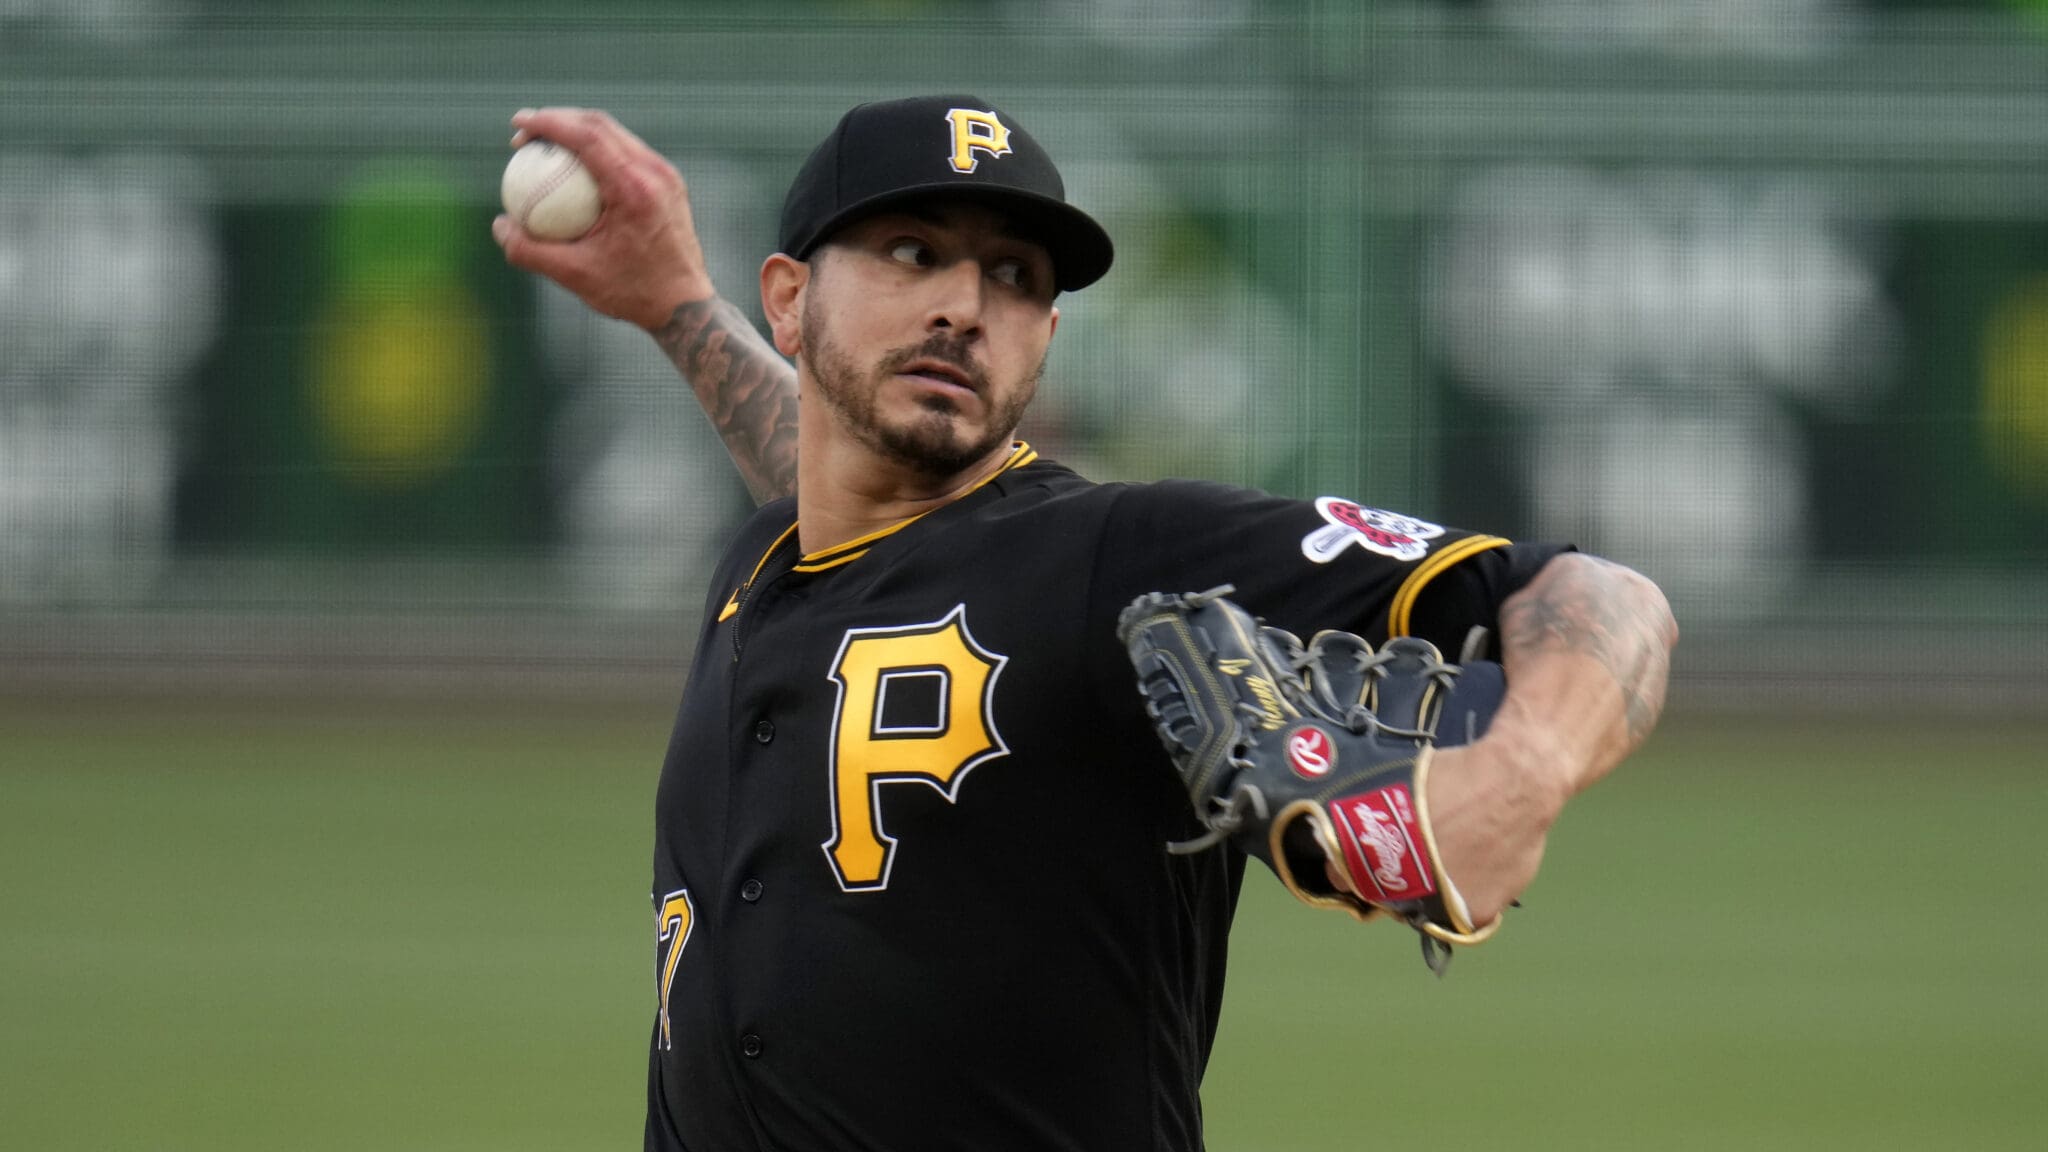 Pittsburgh Pirates, Vince Vealasquez